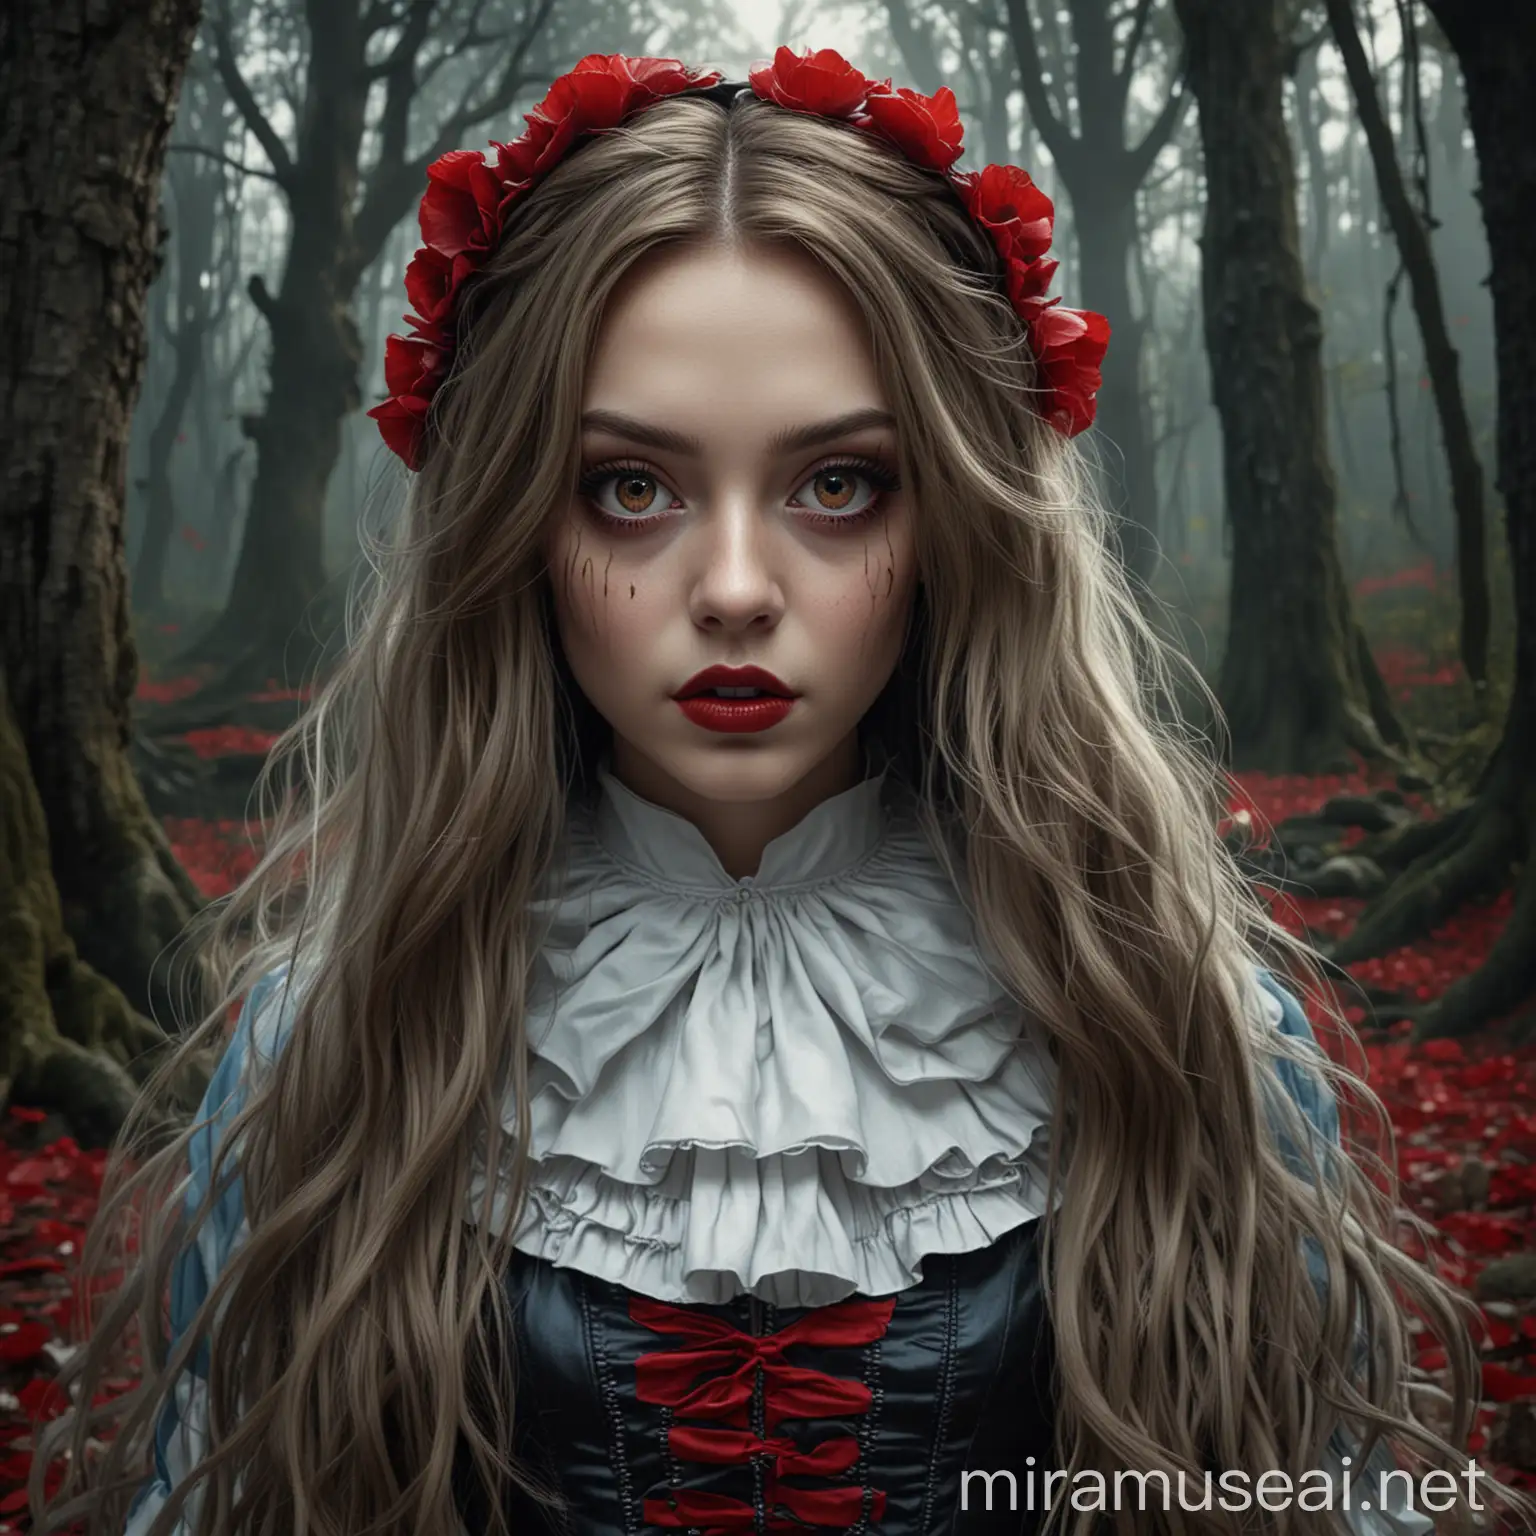  photorealistic dark alice in wonderland haunted forest background long flowing hair red lips big eyes